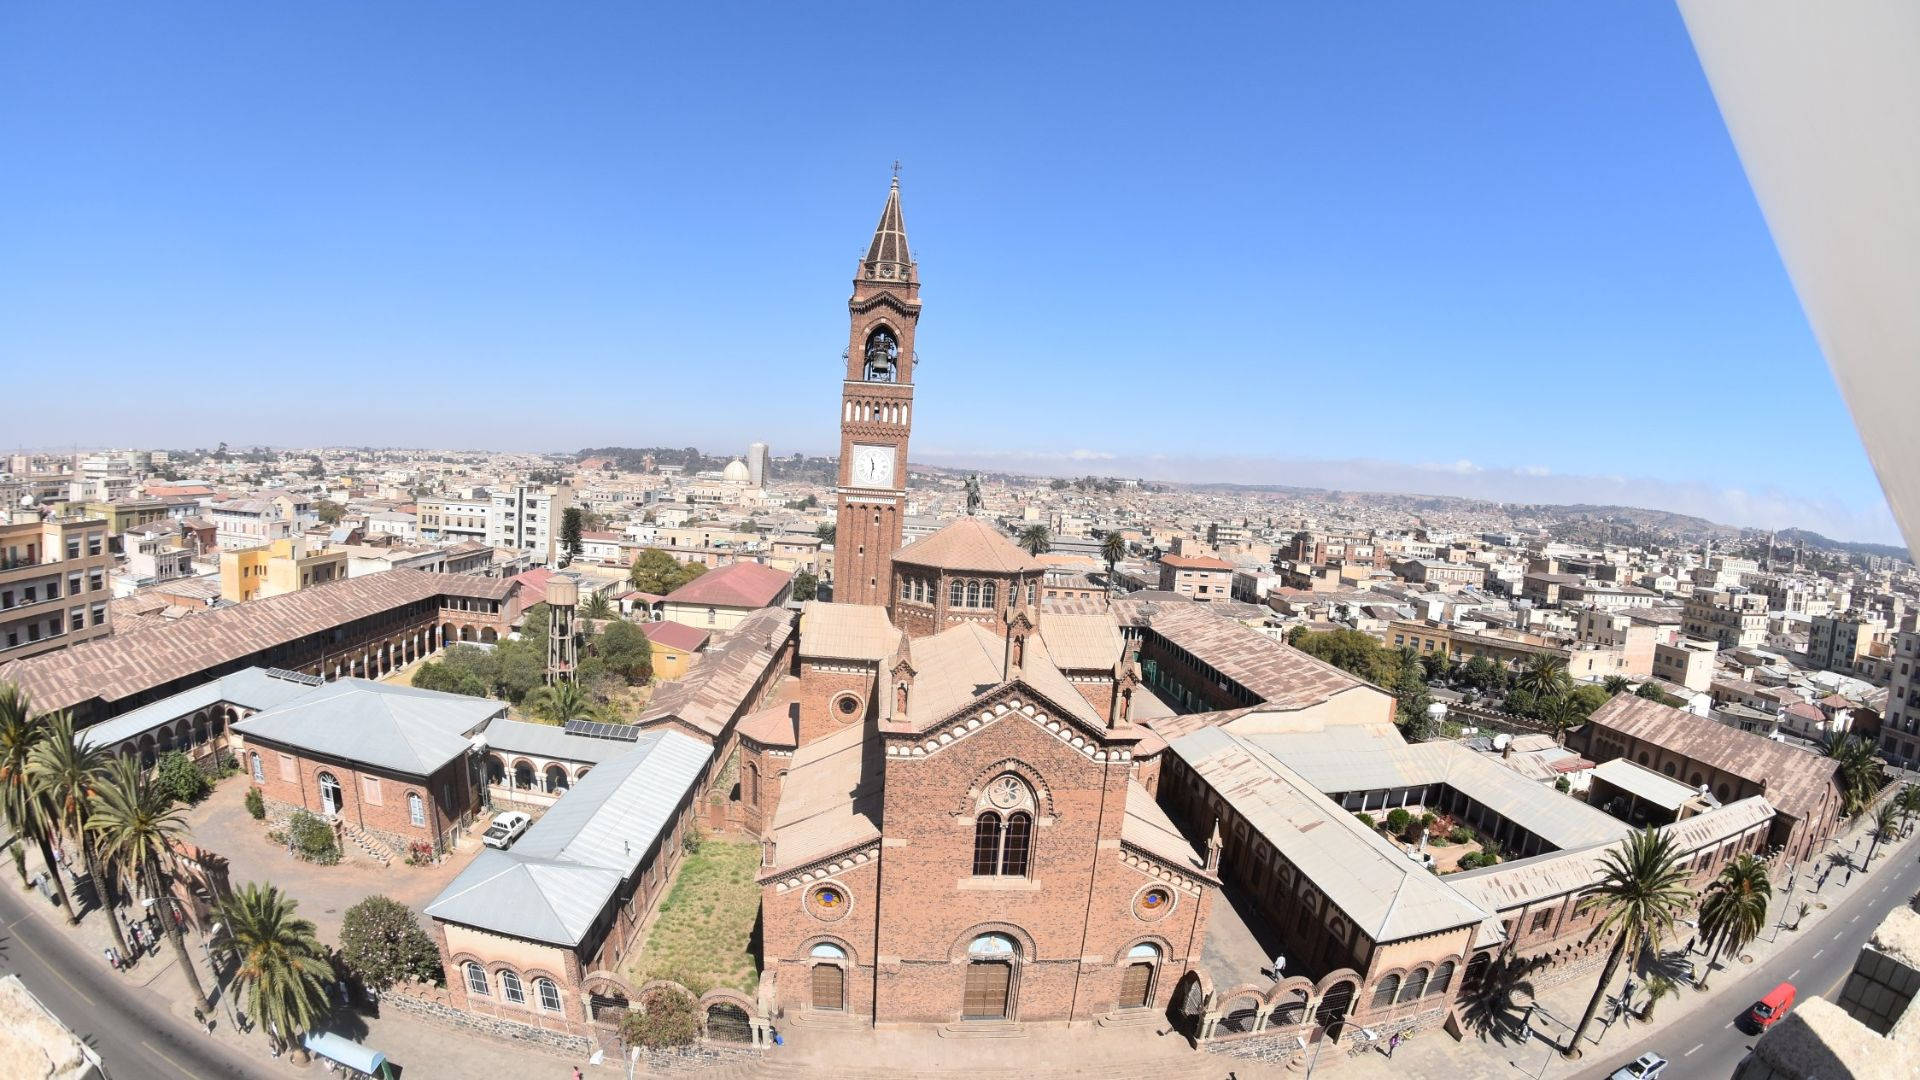 Eritrea Church View From Sky